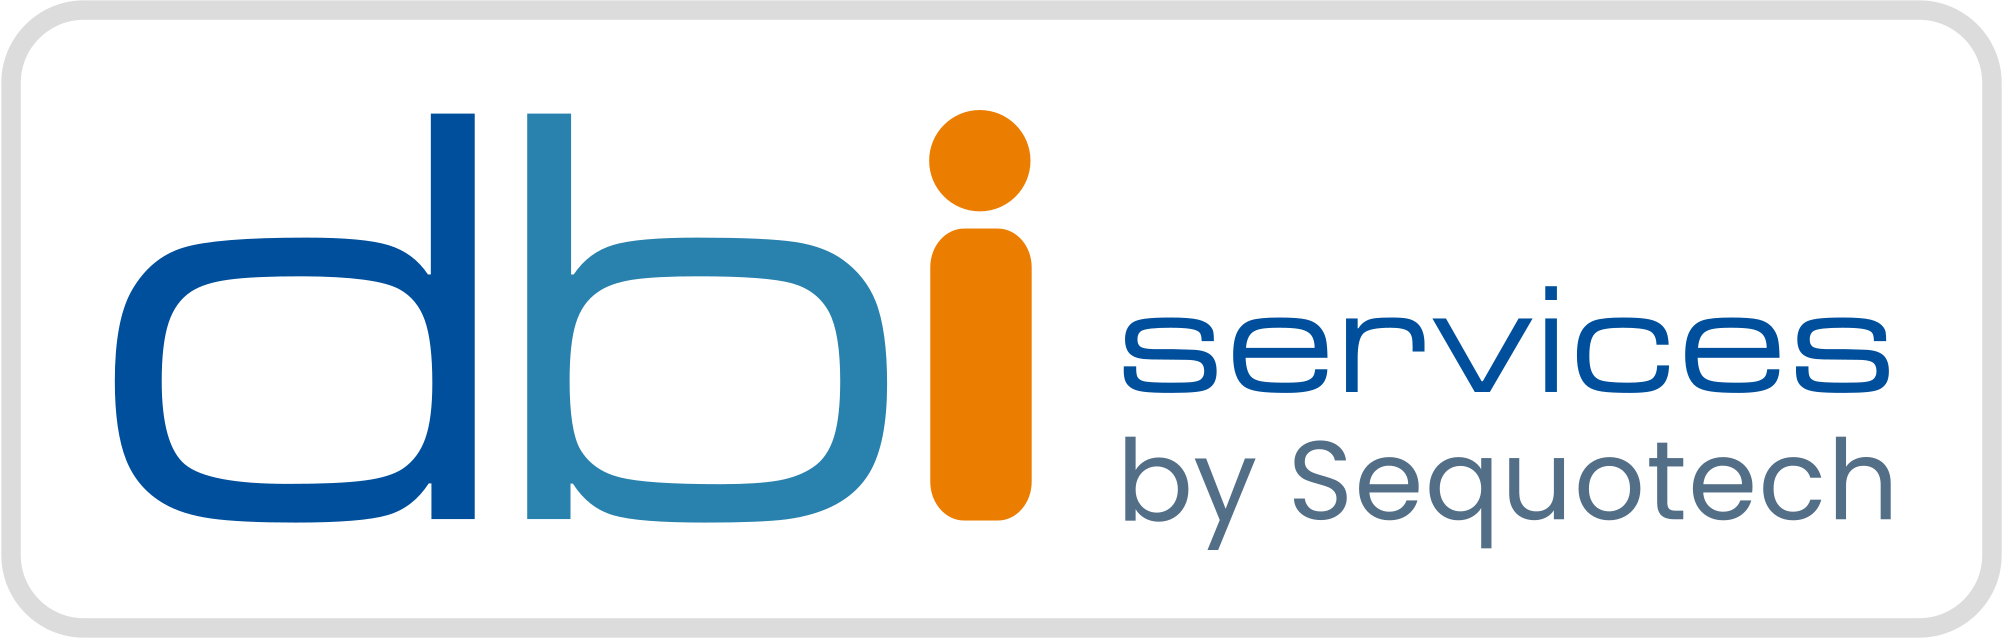 dbi services